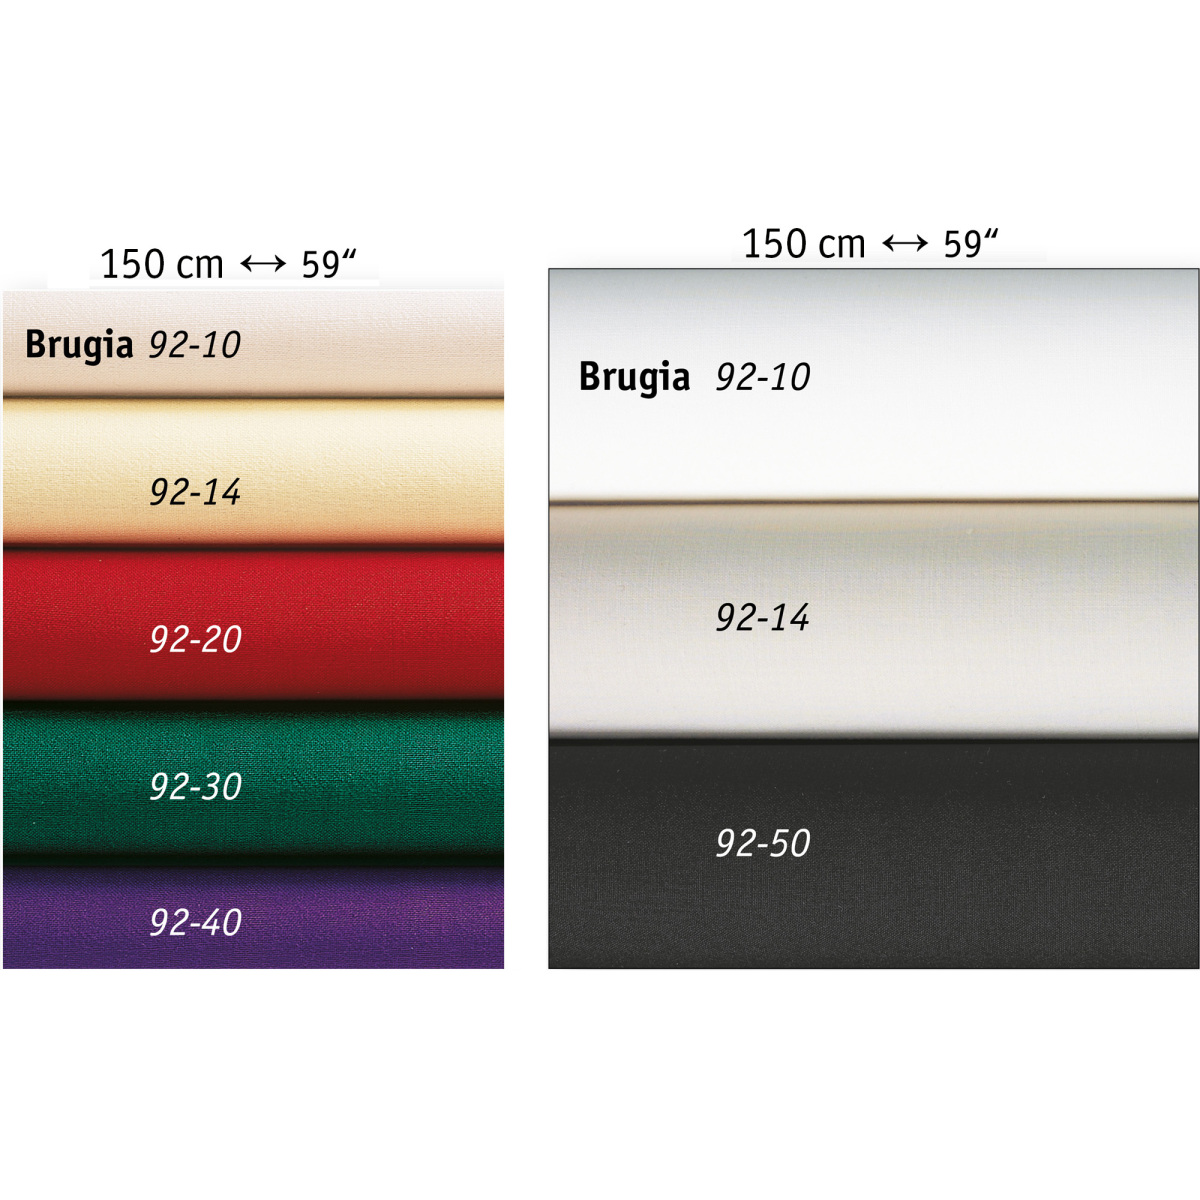 206-Brugia92-All_colors-inch_cm-2000x2000pix-KW10-MR1